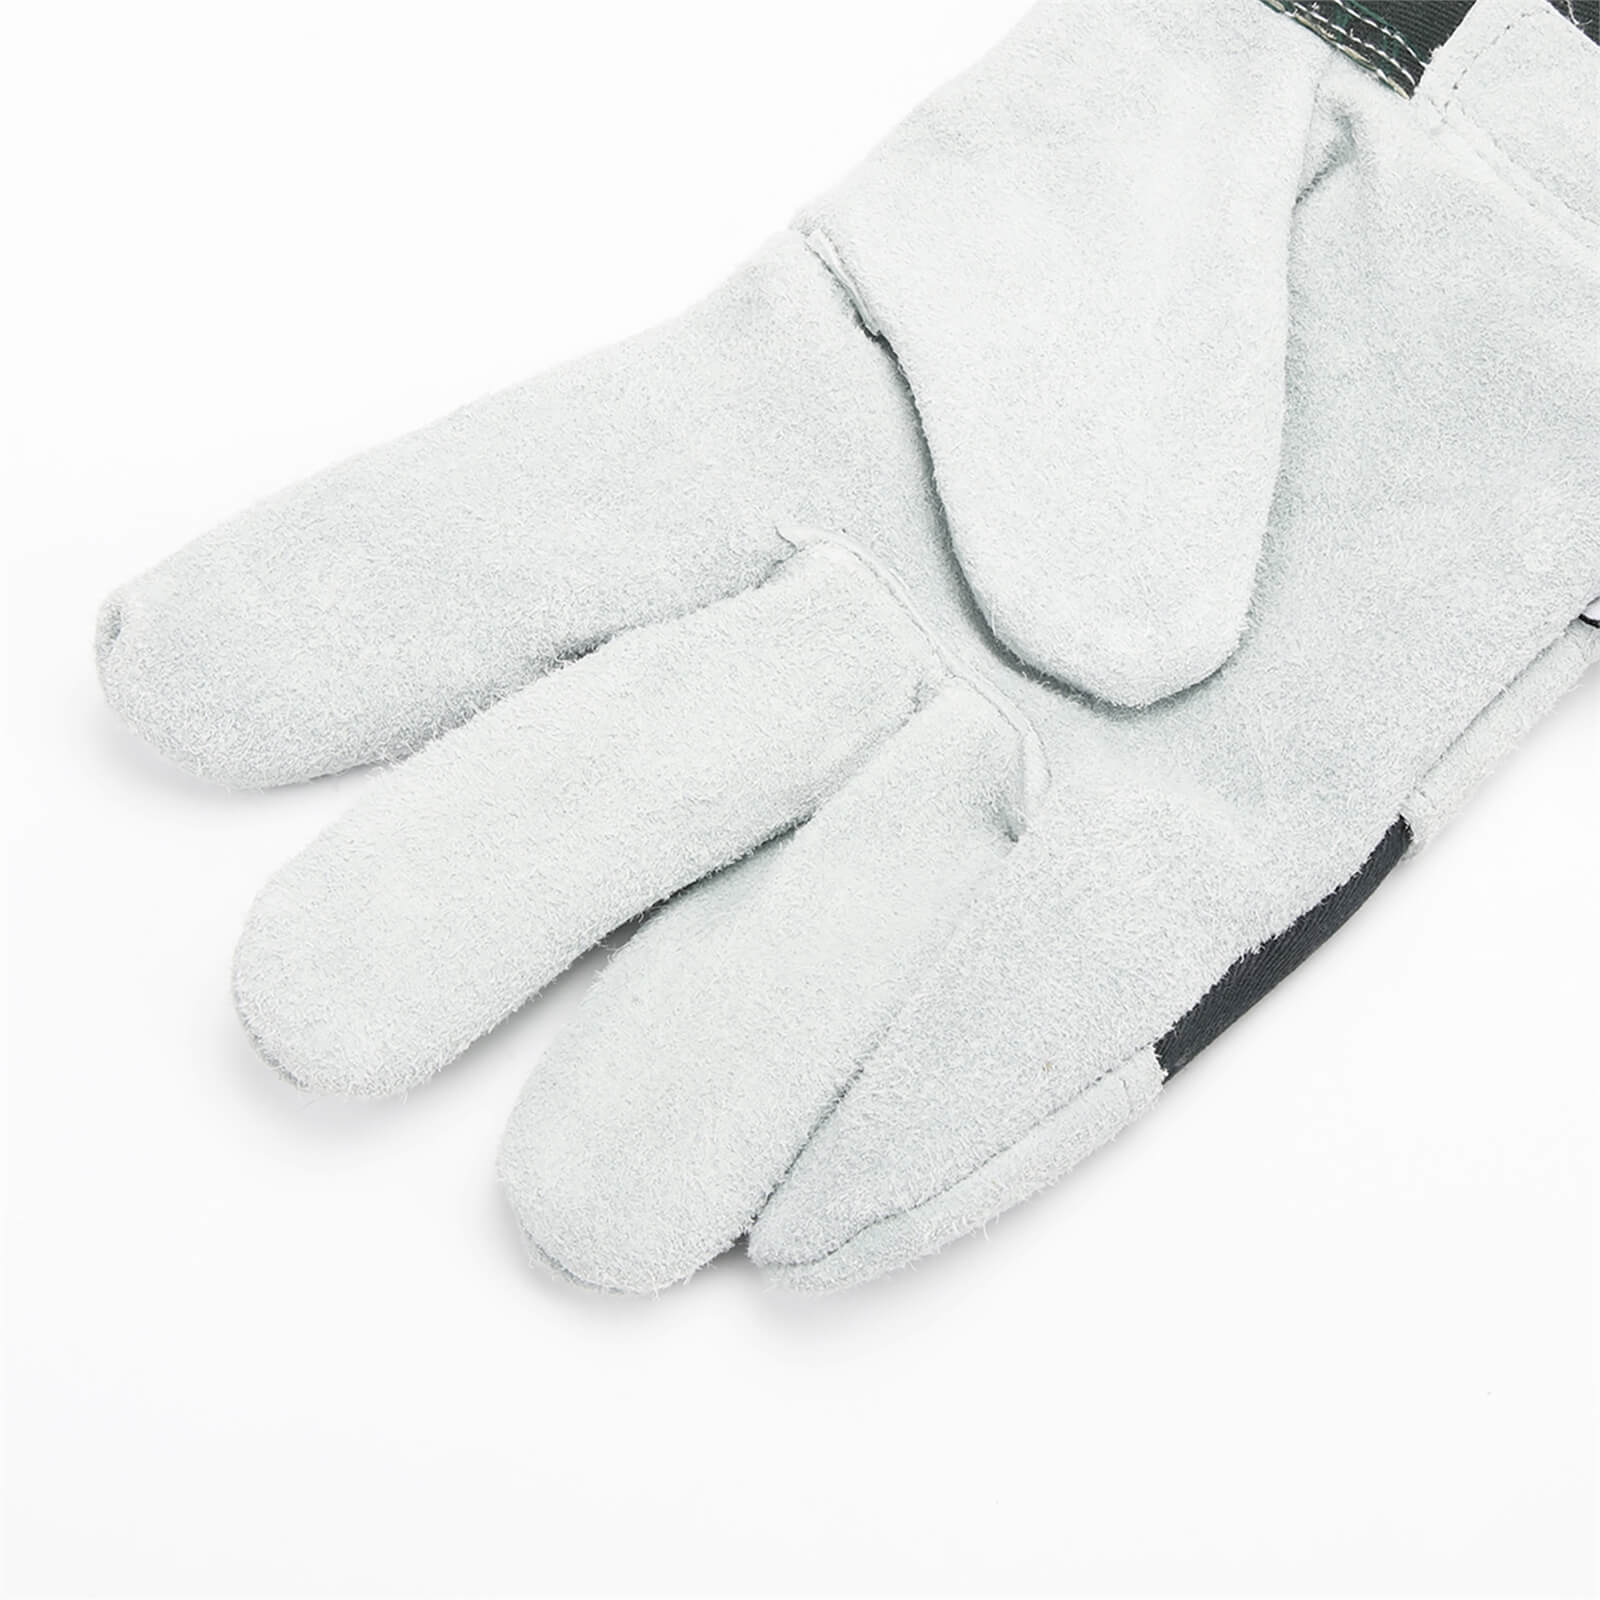 Homebase Classic Rigger Gloves - Medium